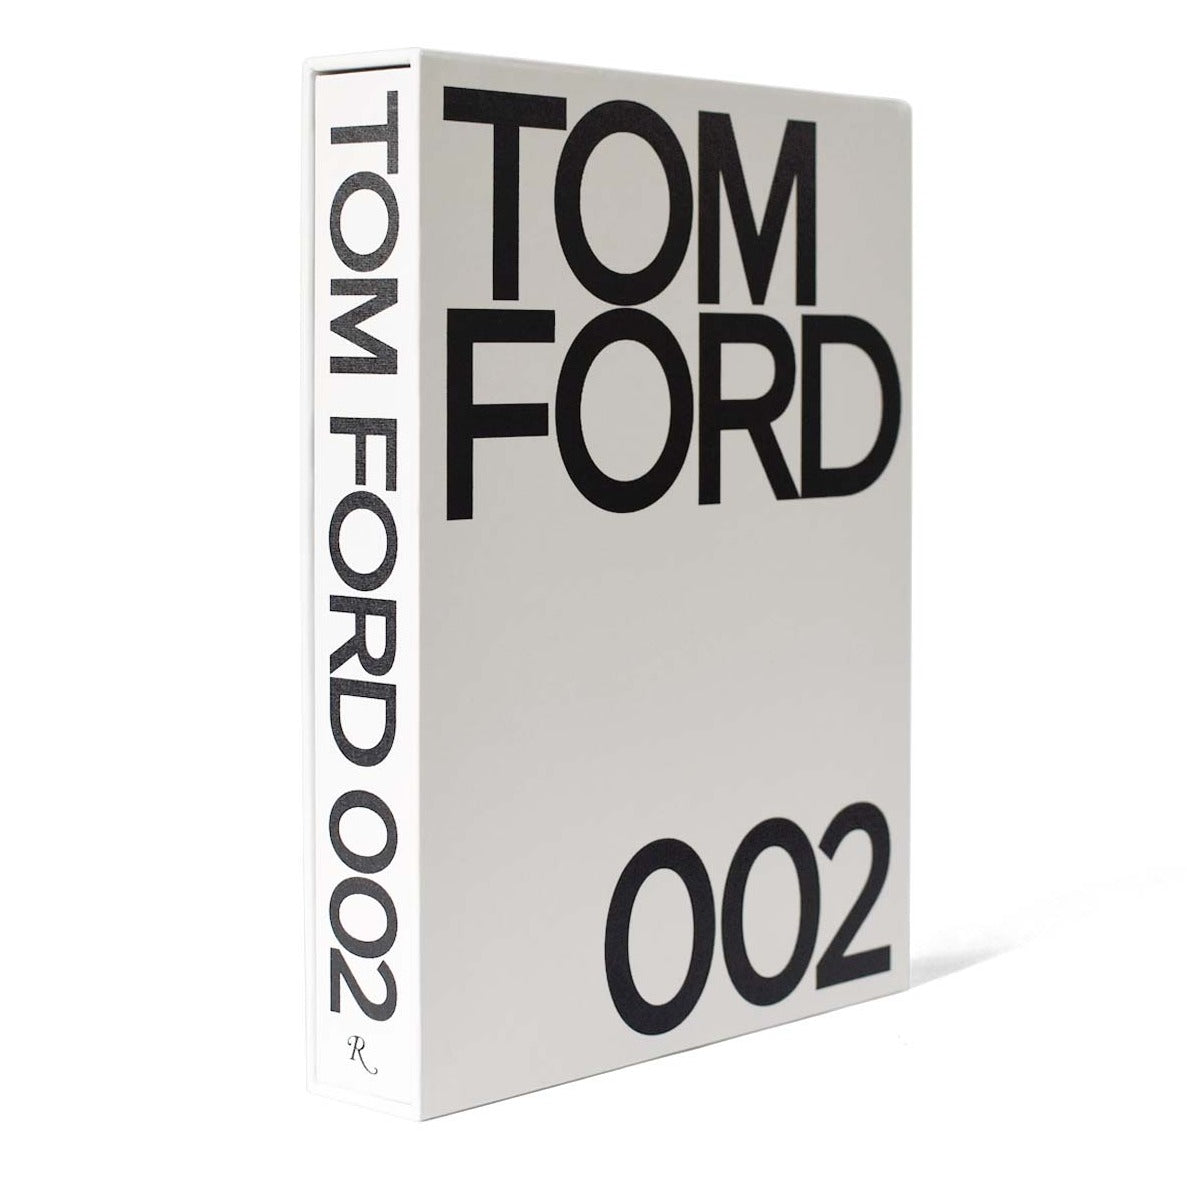 Tom Ford: Ford, Tom, Foley, Bridget, Carter, Graydon, Wintour